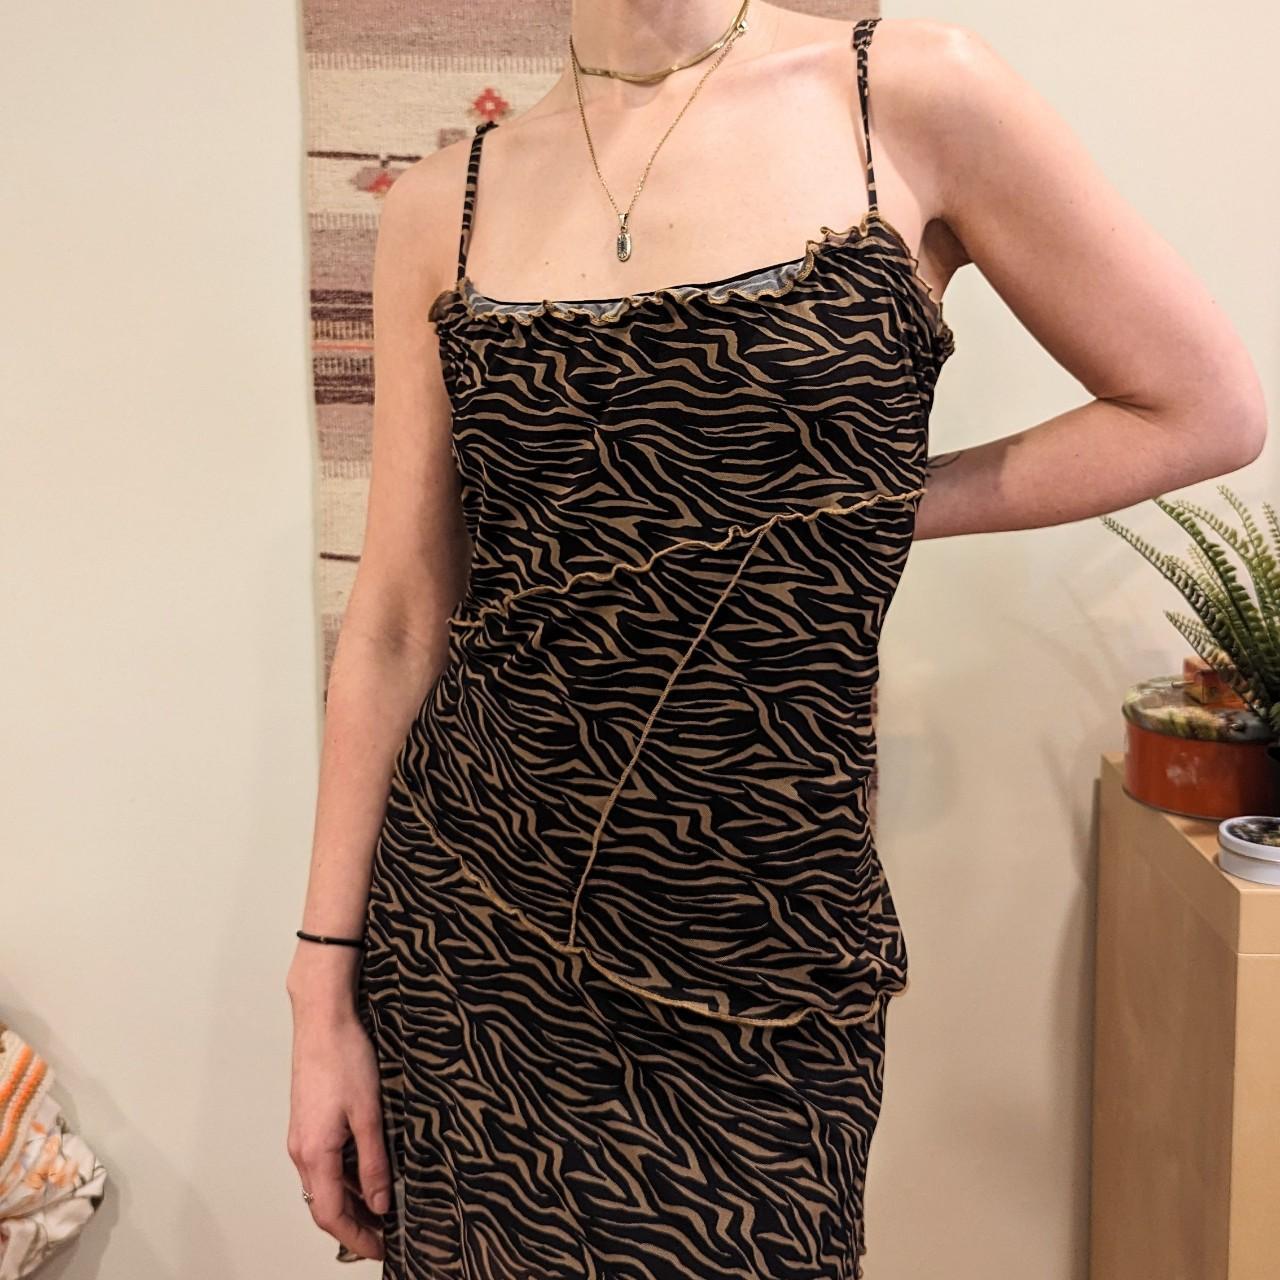 Urban Outfitters Moxie Mesh Mini Slip Dress in Tiger - Depop